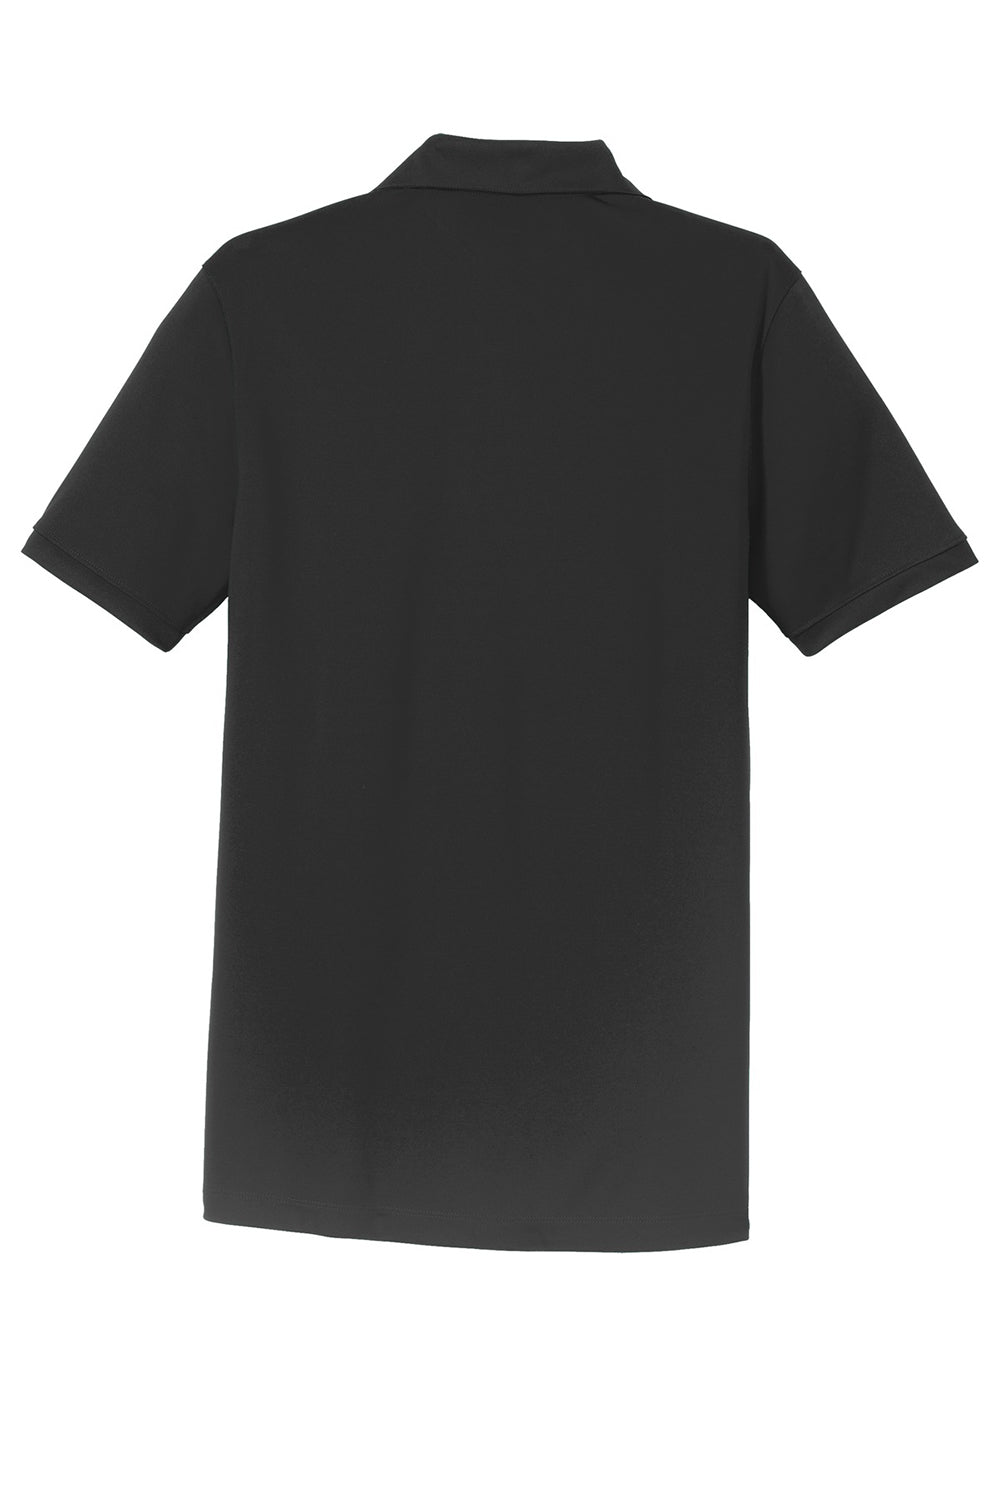 Nike 799802 Mens Players Dri-Fit Moisture Wicking Short Sleeve Polo Shirt Black Flat Back